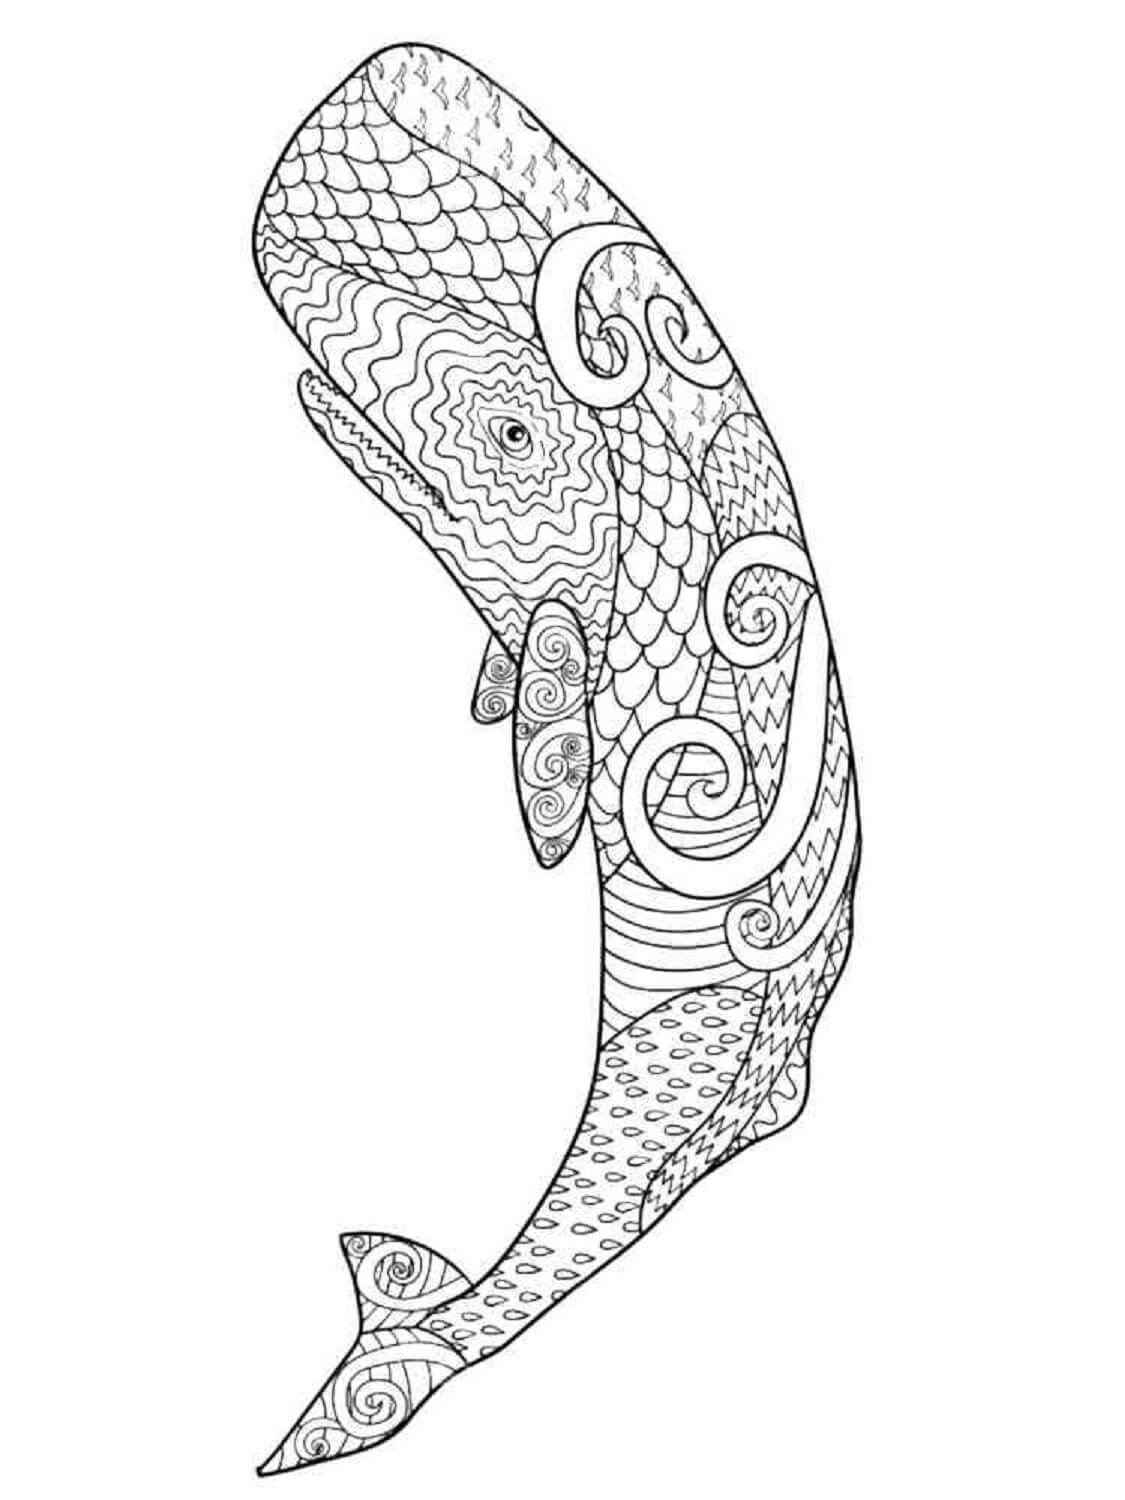 Mandala Whale Coloring Page - Sheet 5 Mandalas